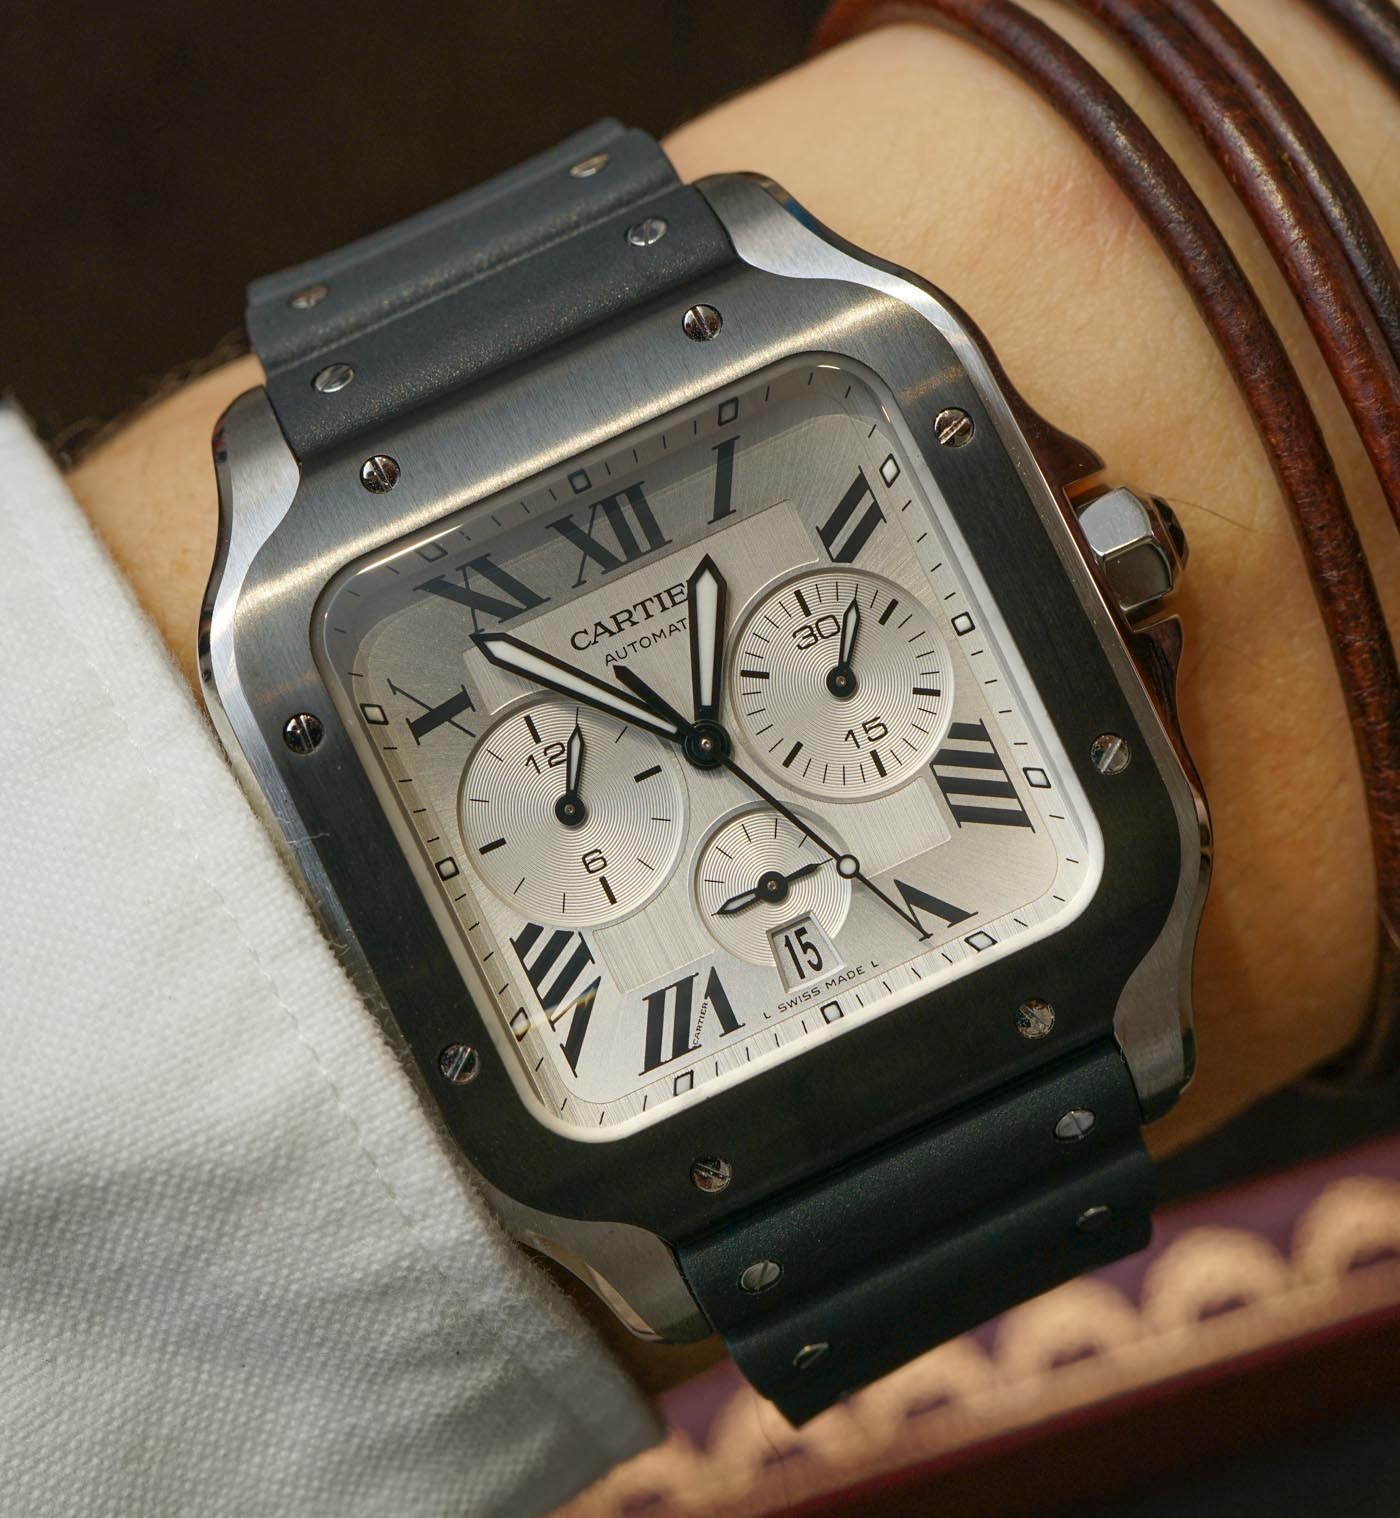 2019 年全新 Cartier Santos Chronograph 腕表評測 腕上評測 